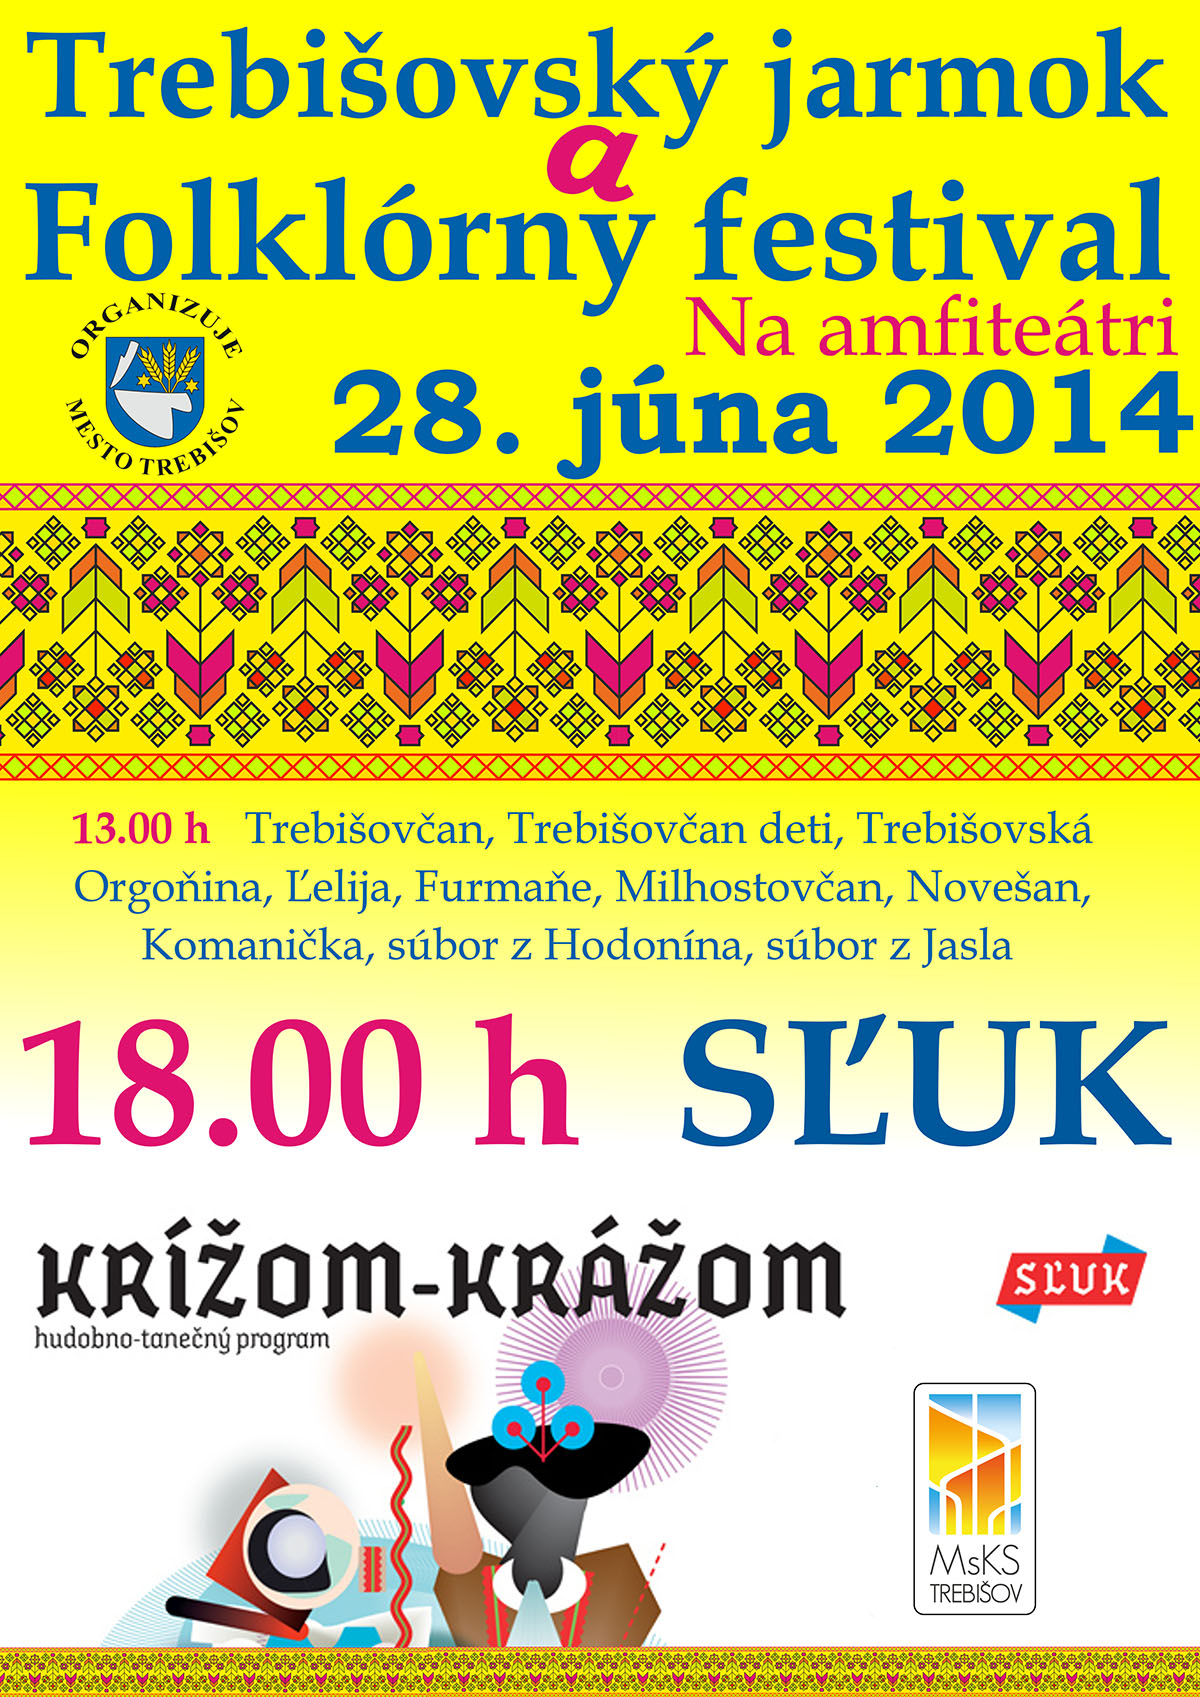 Trebiovsk folklrny festival Trebiov 2014